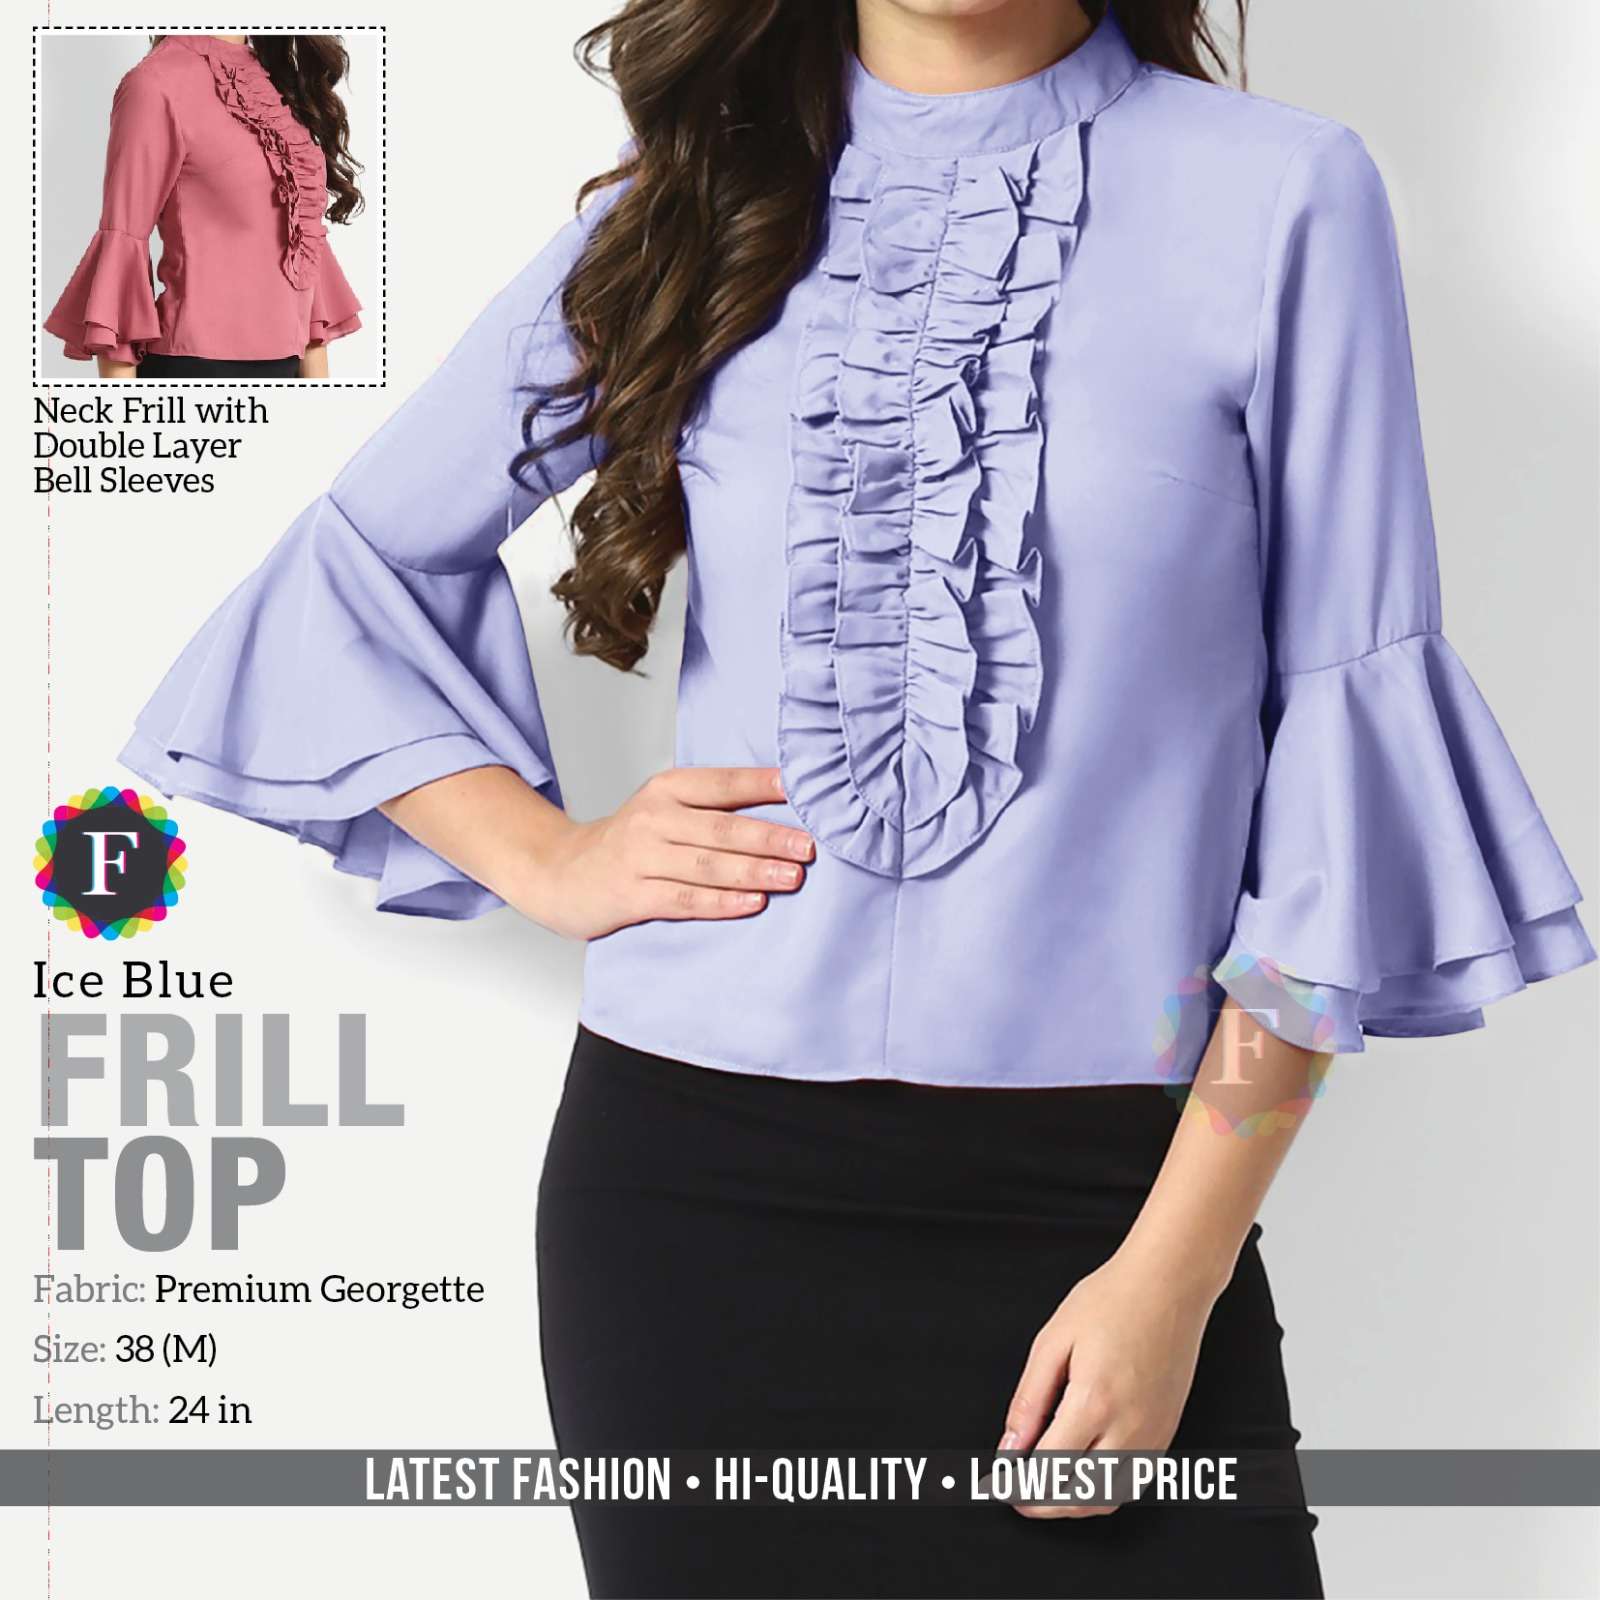 Bell Sleeve Frill Top Western Wear Girls Tops Buy Online Shopping